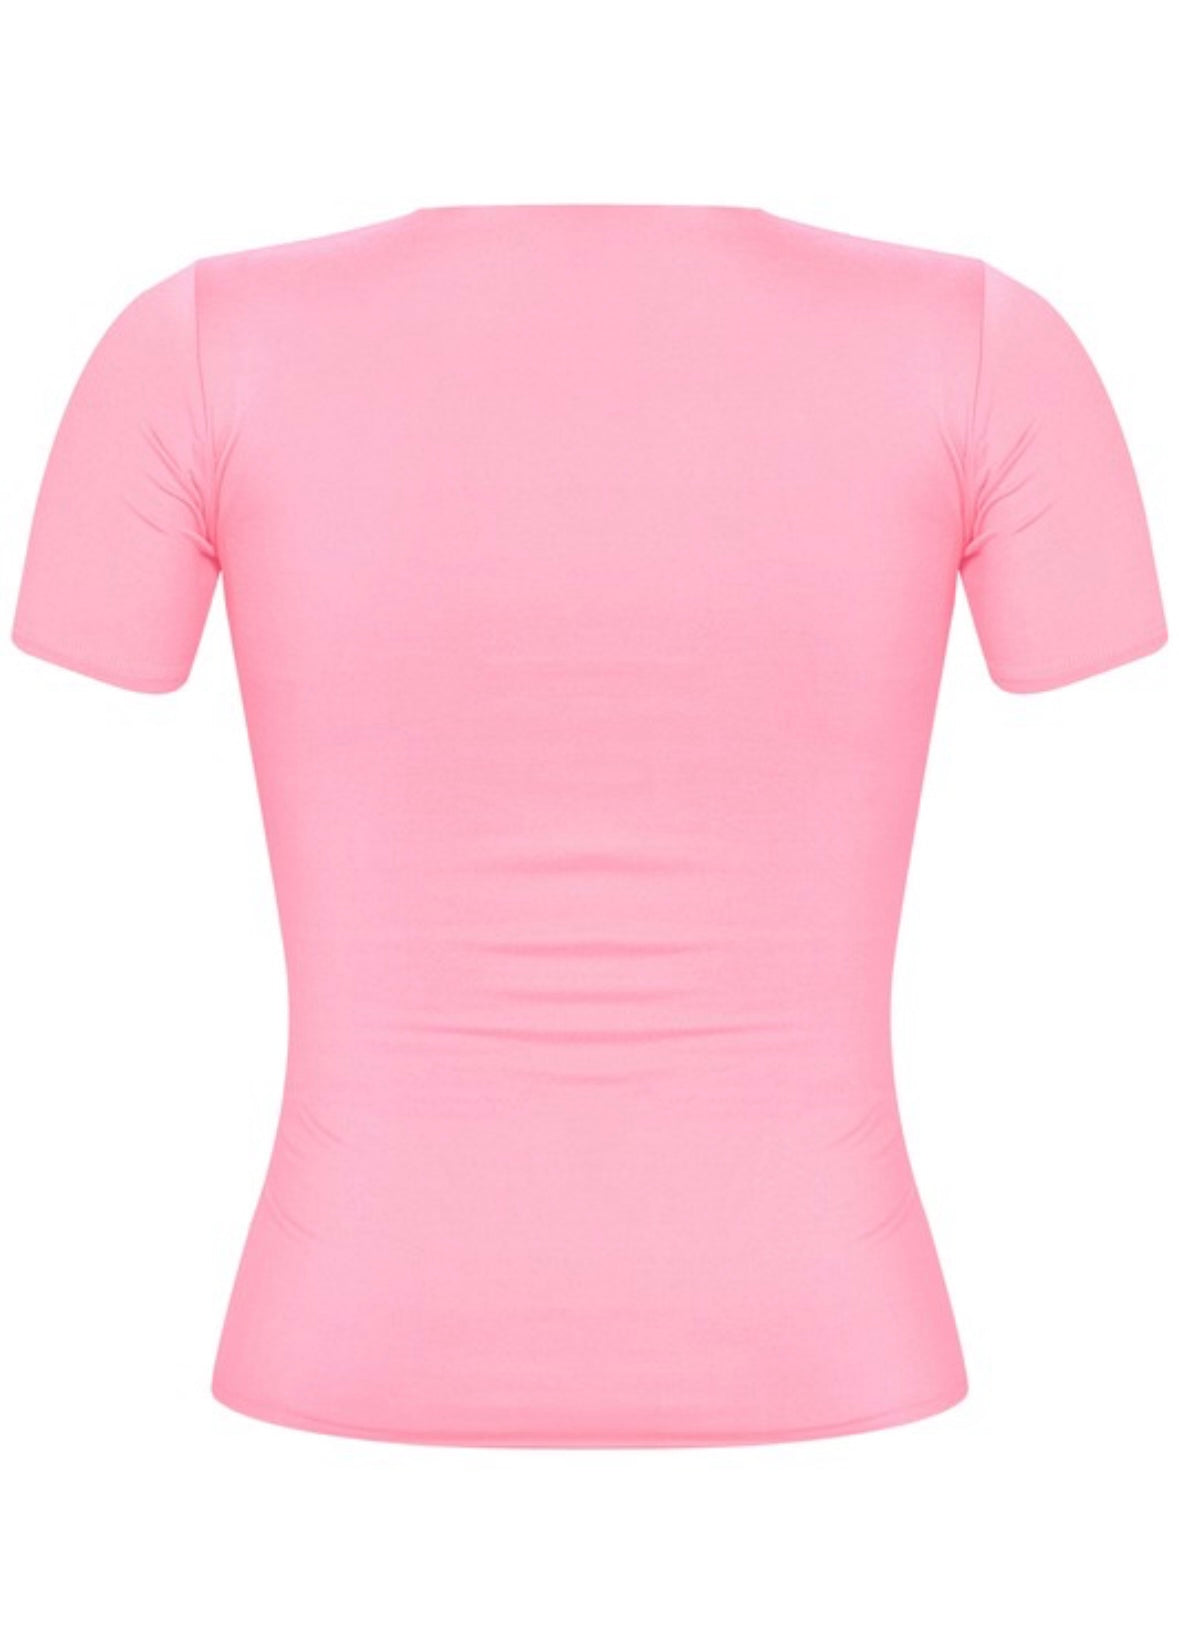 EV Basic Short Sleeve (Pink)